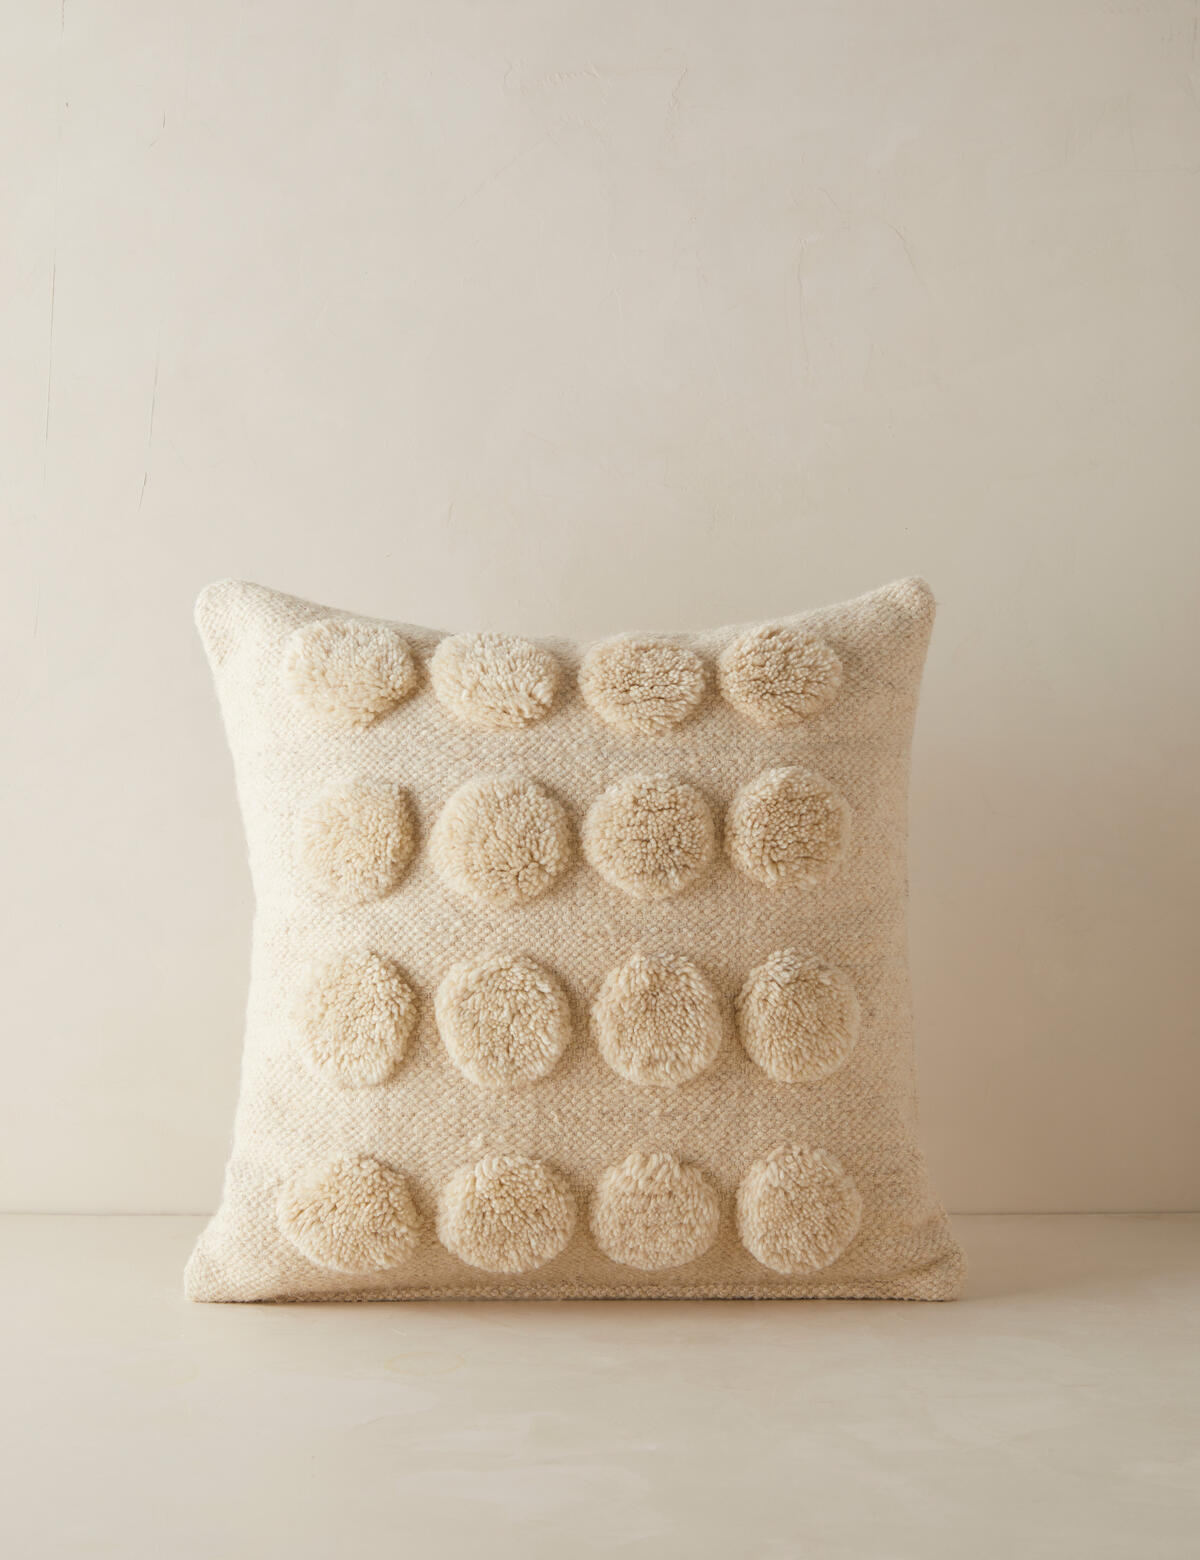 6 stylish throw pillows to upgrade a sofa or bedding scheme